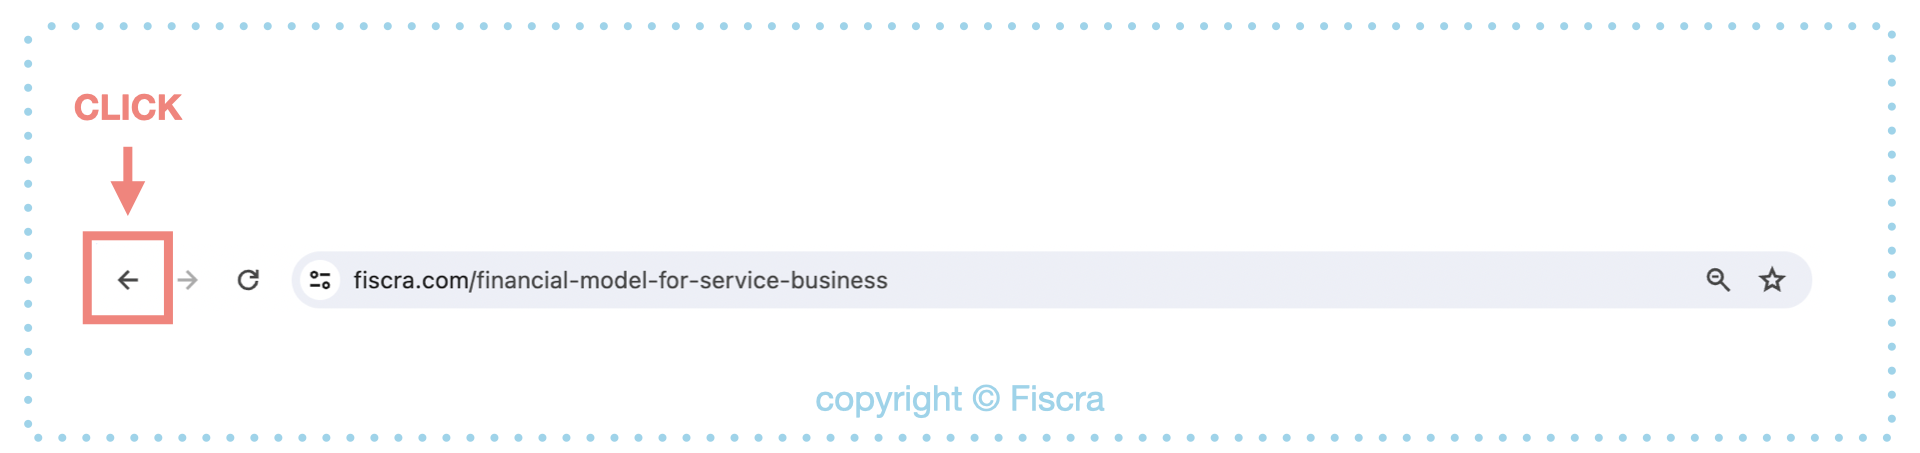 Financial plan for service business | Fiscra.com